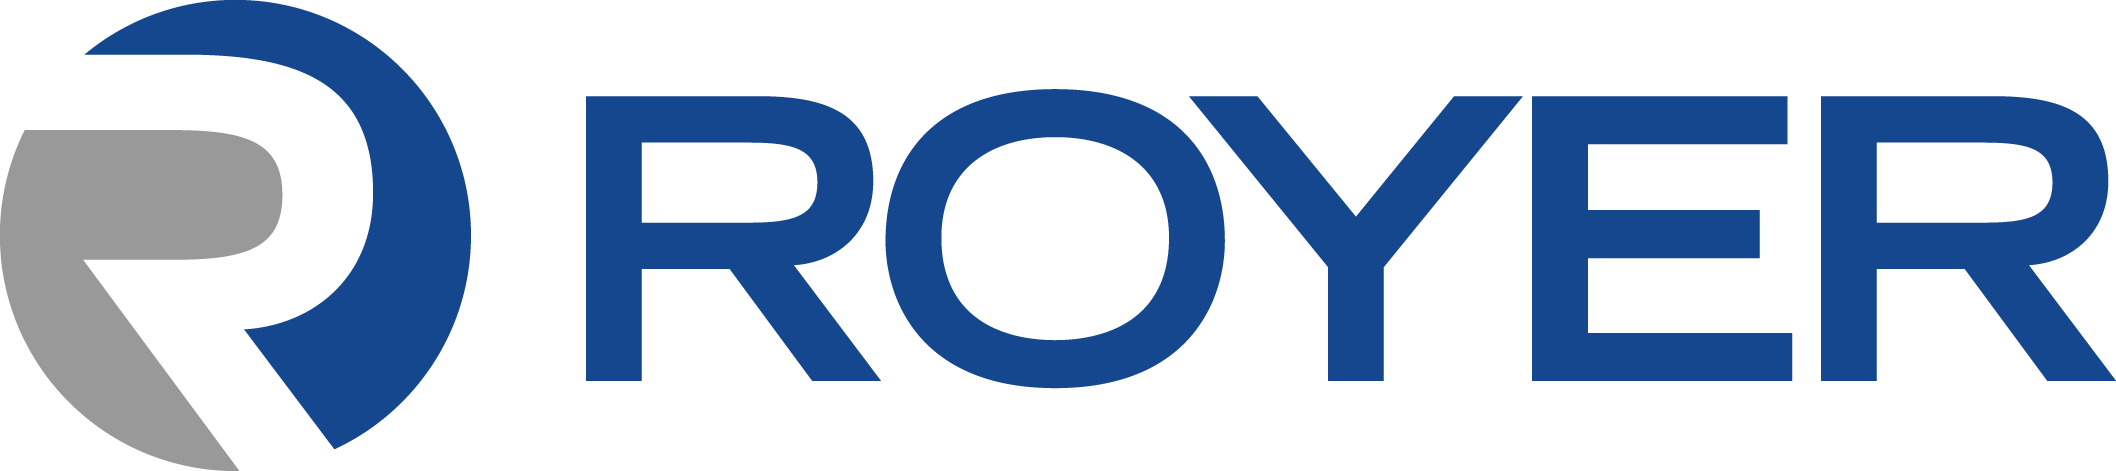 Royer Notag Logo